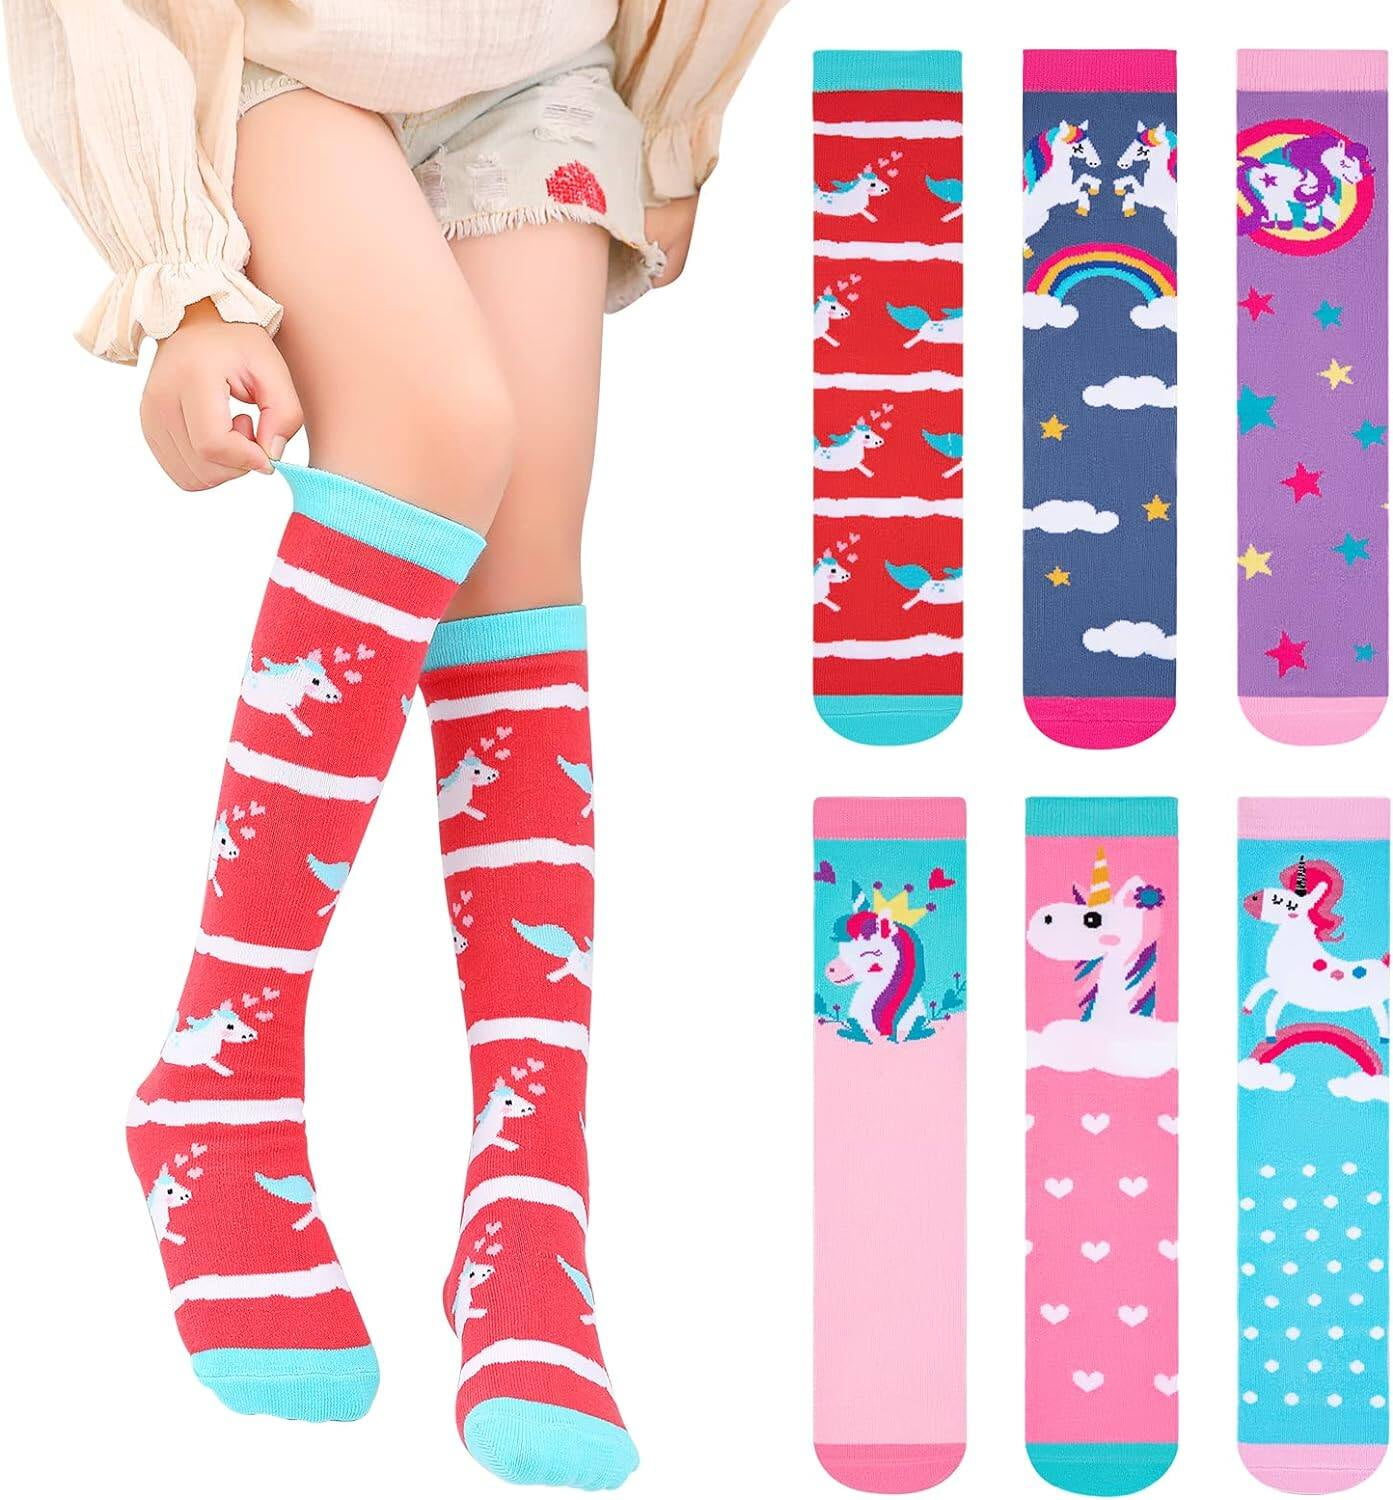 6 Pairs Girls Knee High Socks, Cute Unicorn Socks Colorful Cartoon ...